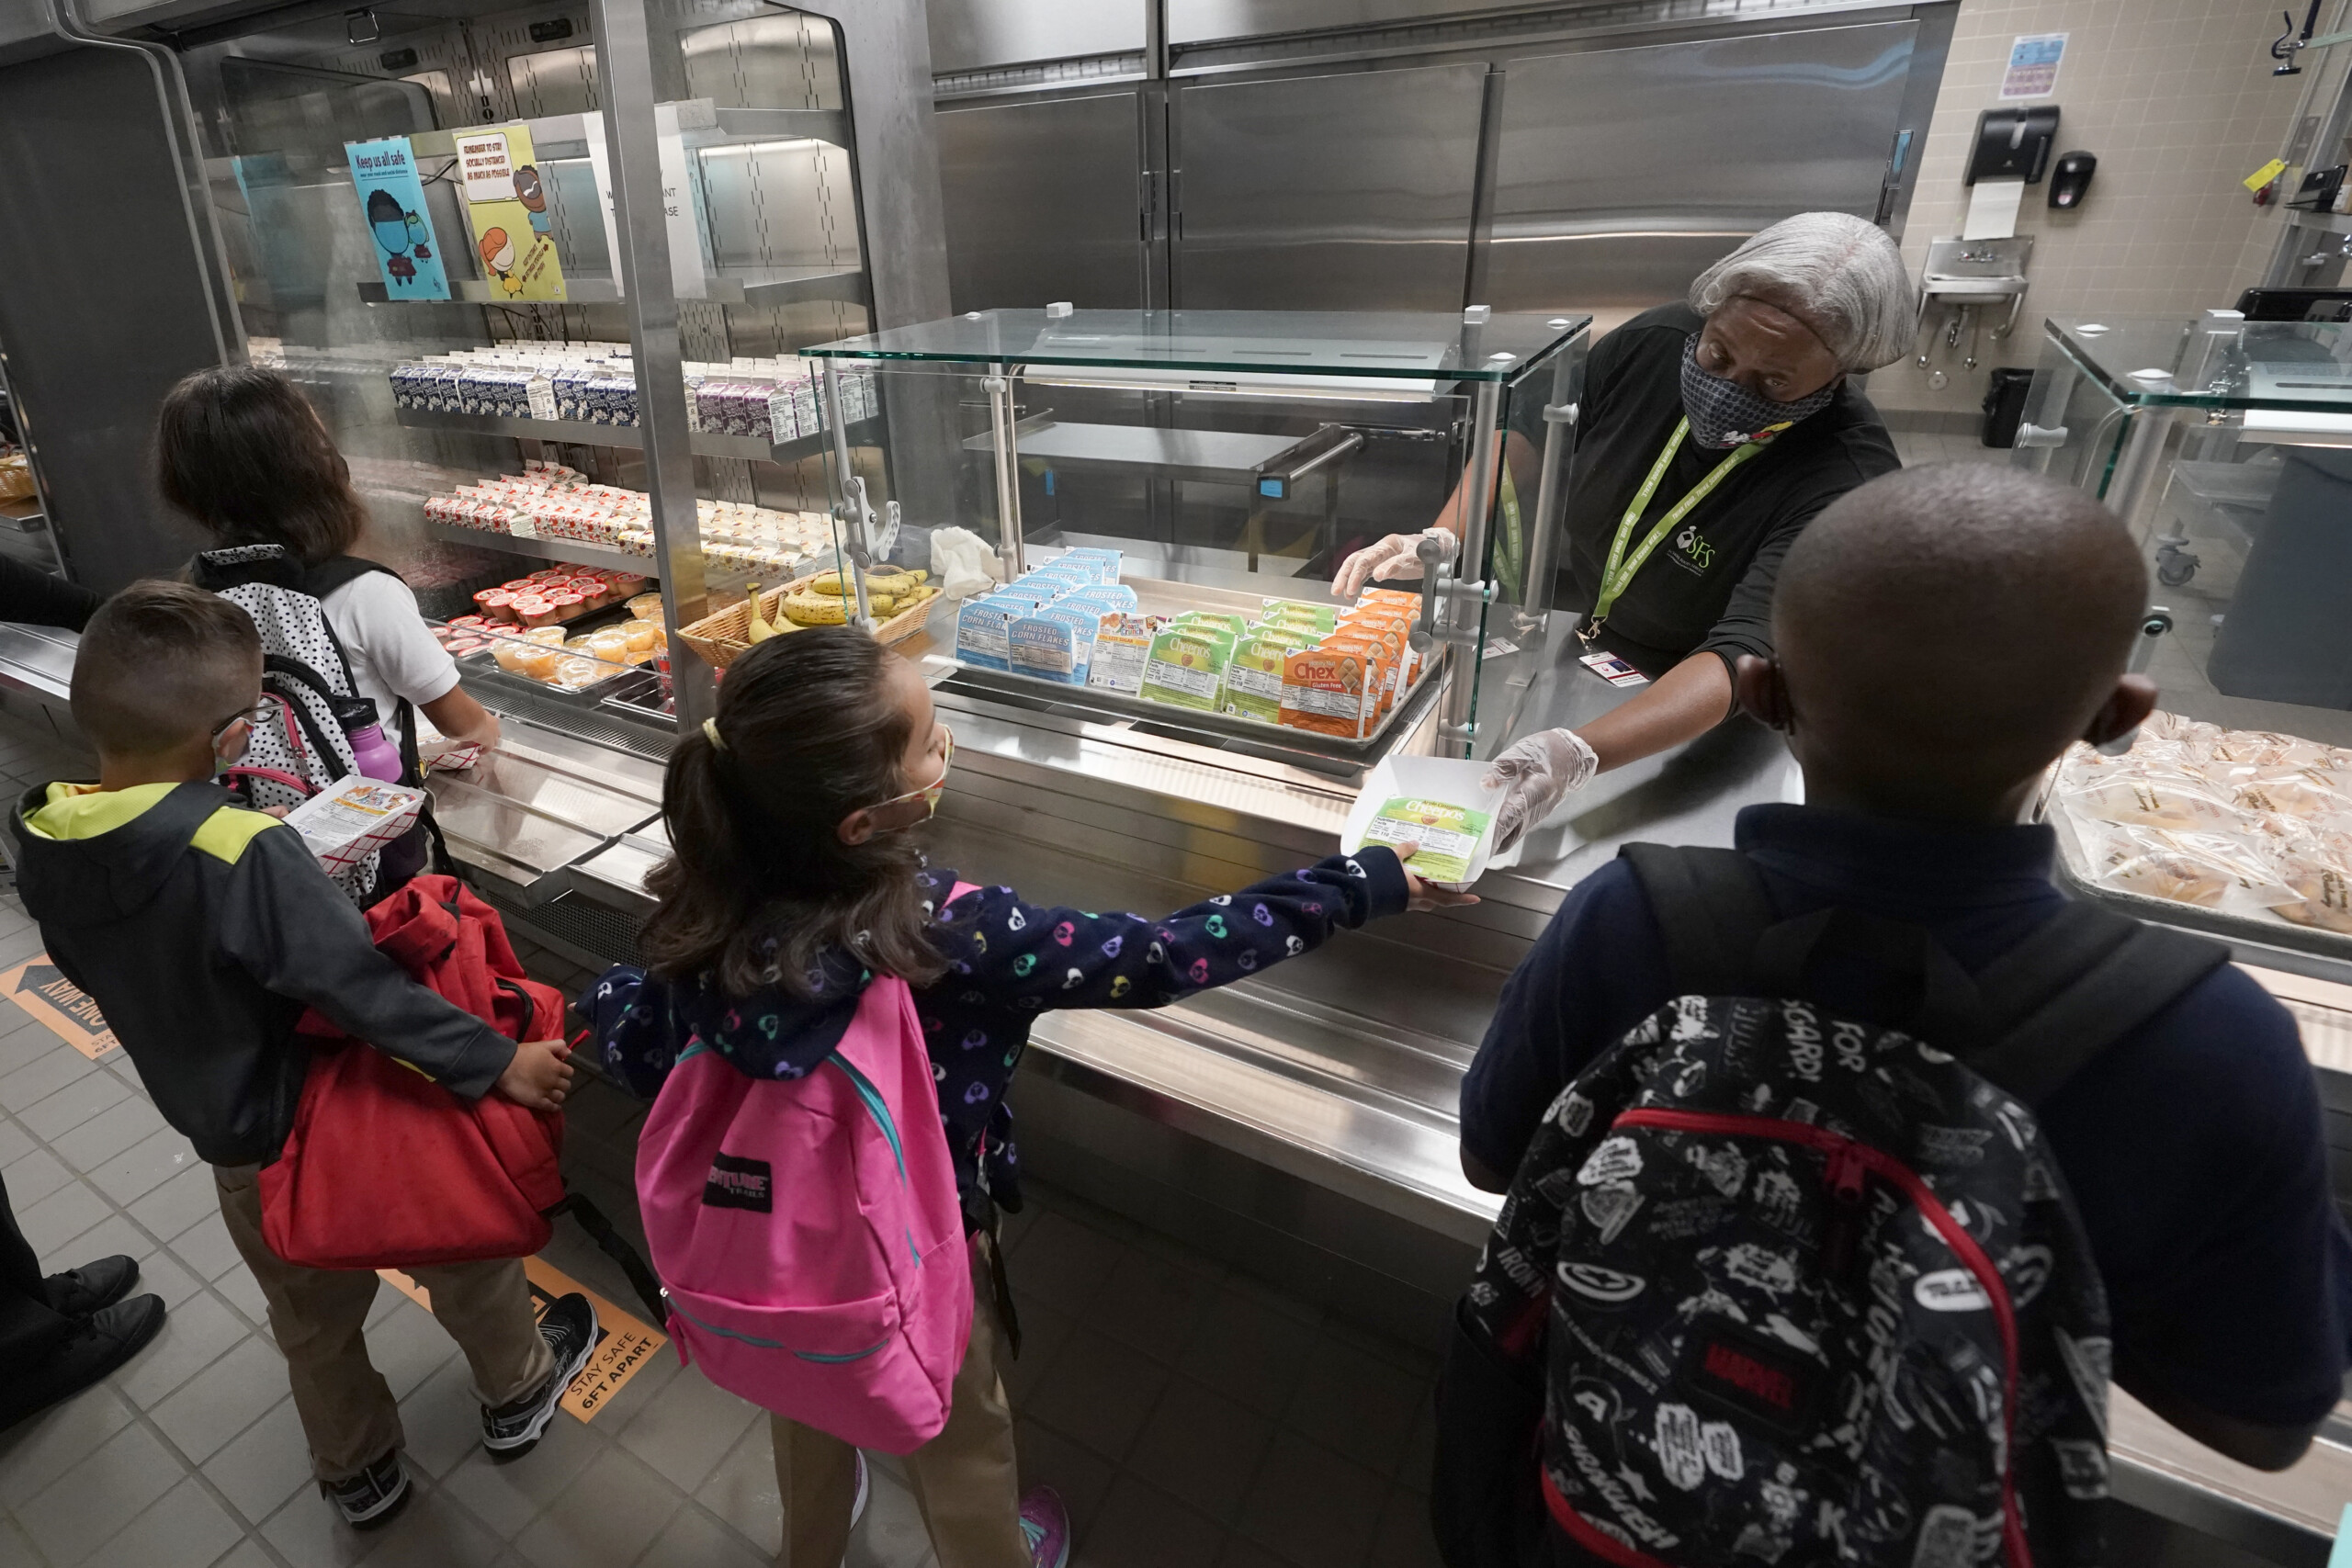 Food service assistant Brenda Bartee gives students breakfast at Washington Elementary School in Riviera Beach in August 2021. | Wilfredo Lee, AP